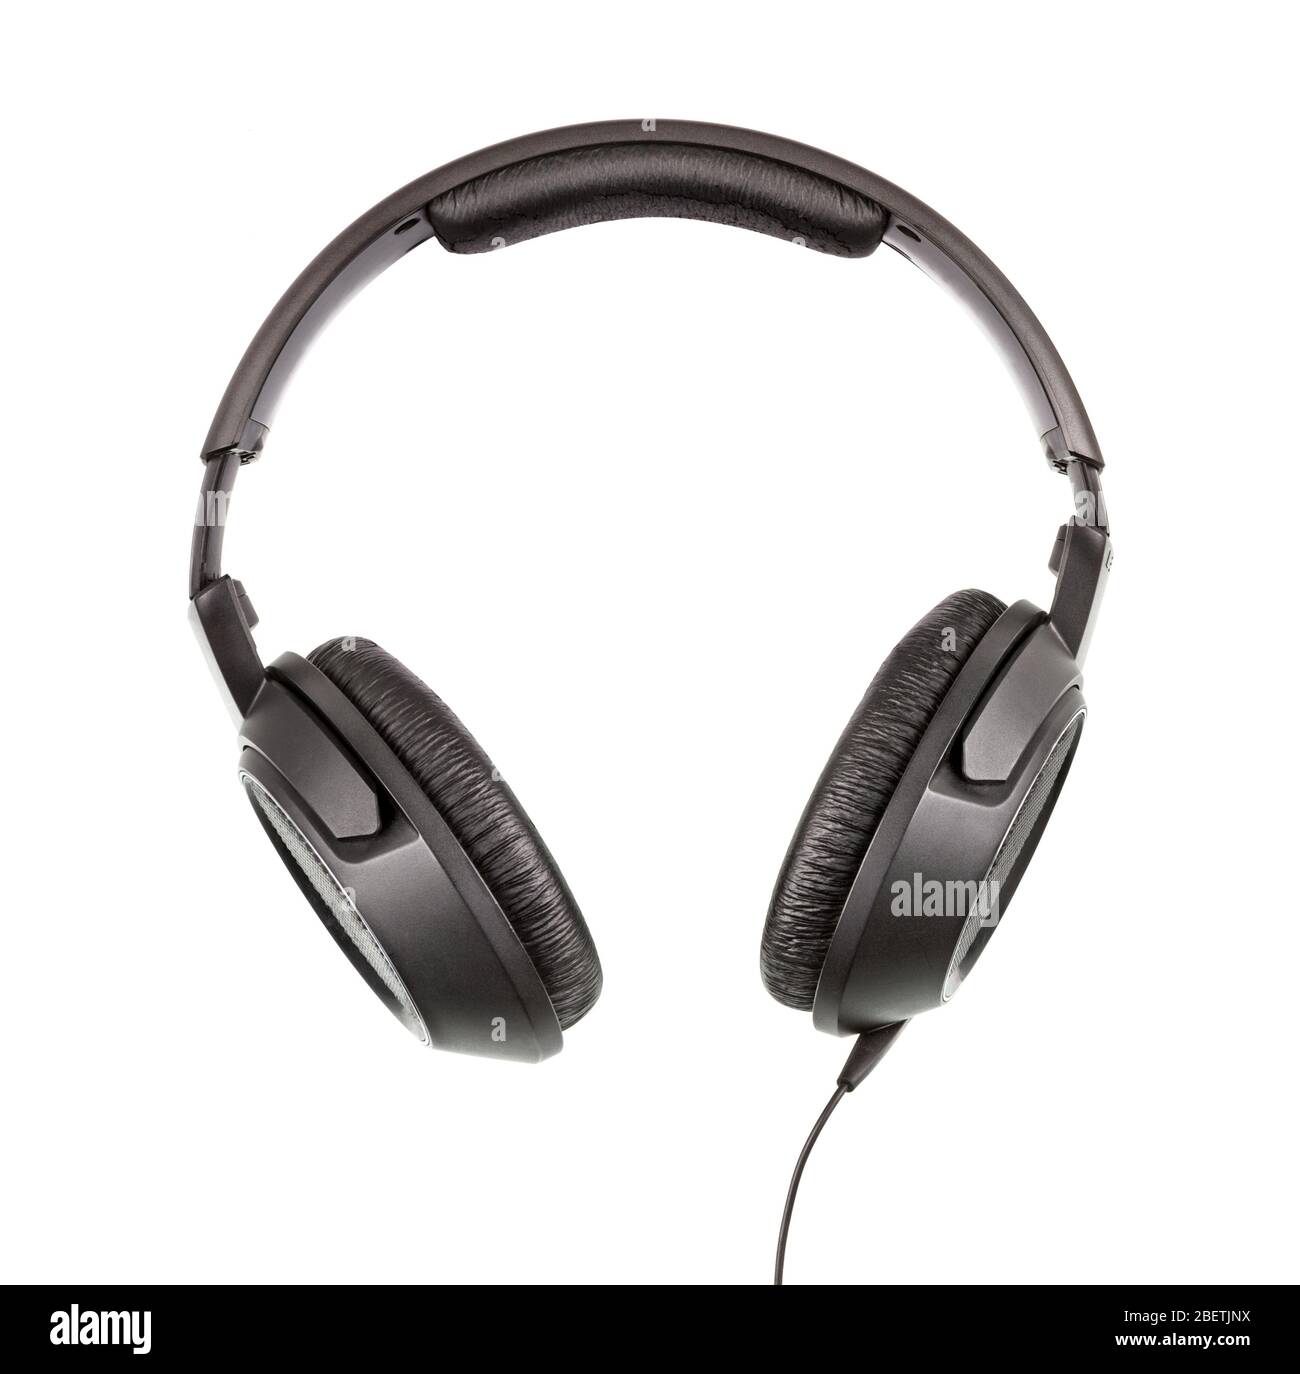 Headphones Isolated on White Background. Black High-quality headphone close up photo. Stock Photo